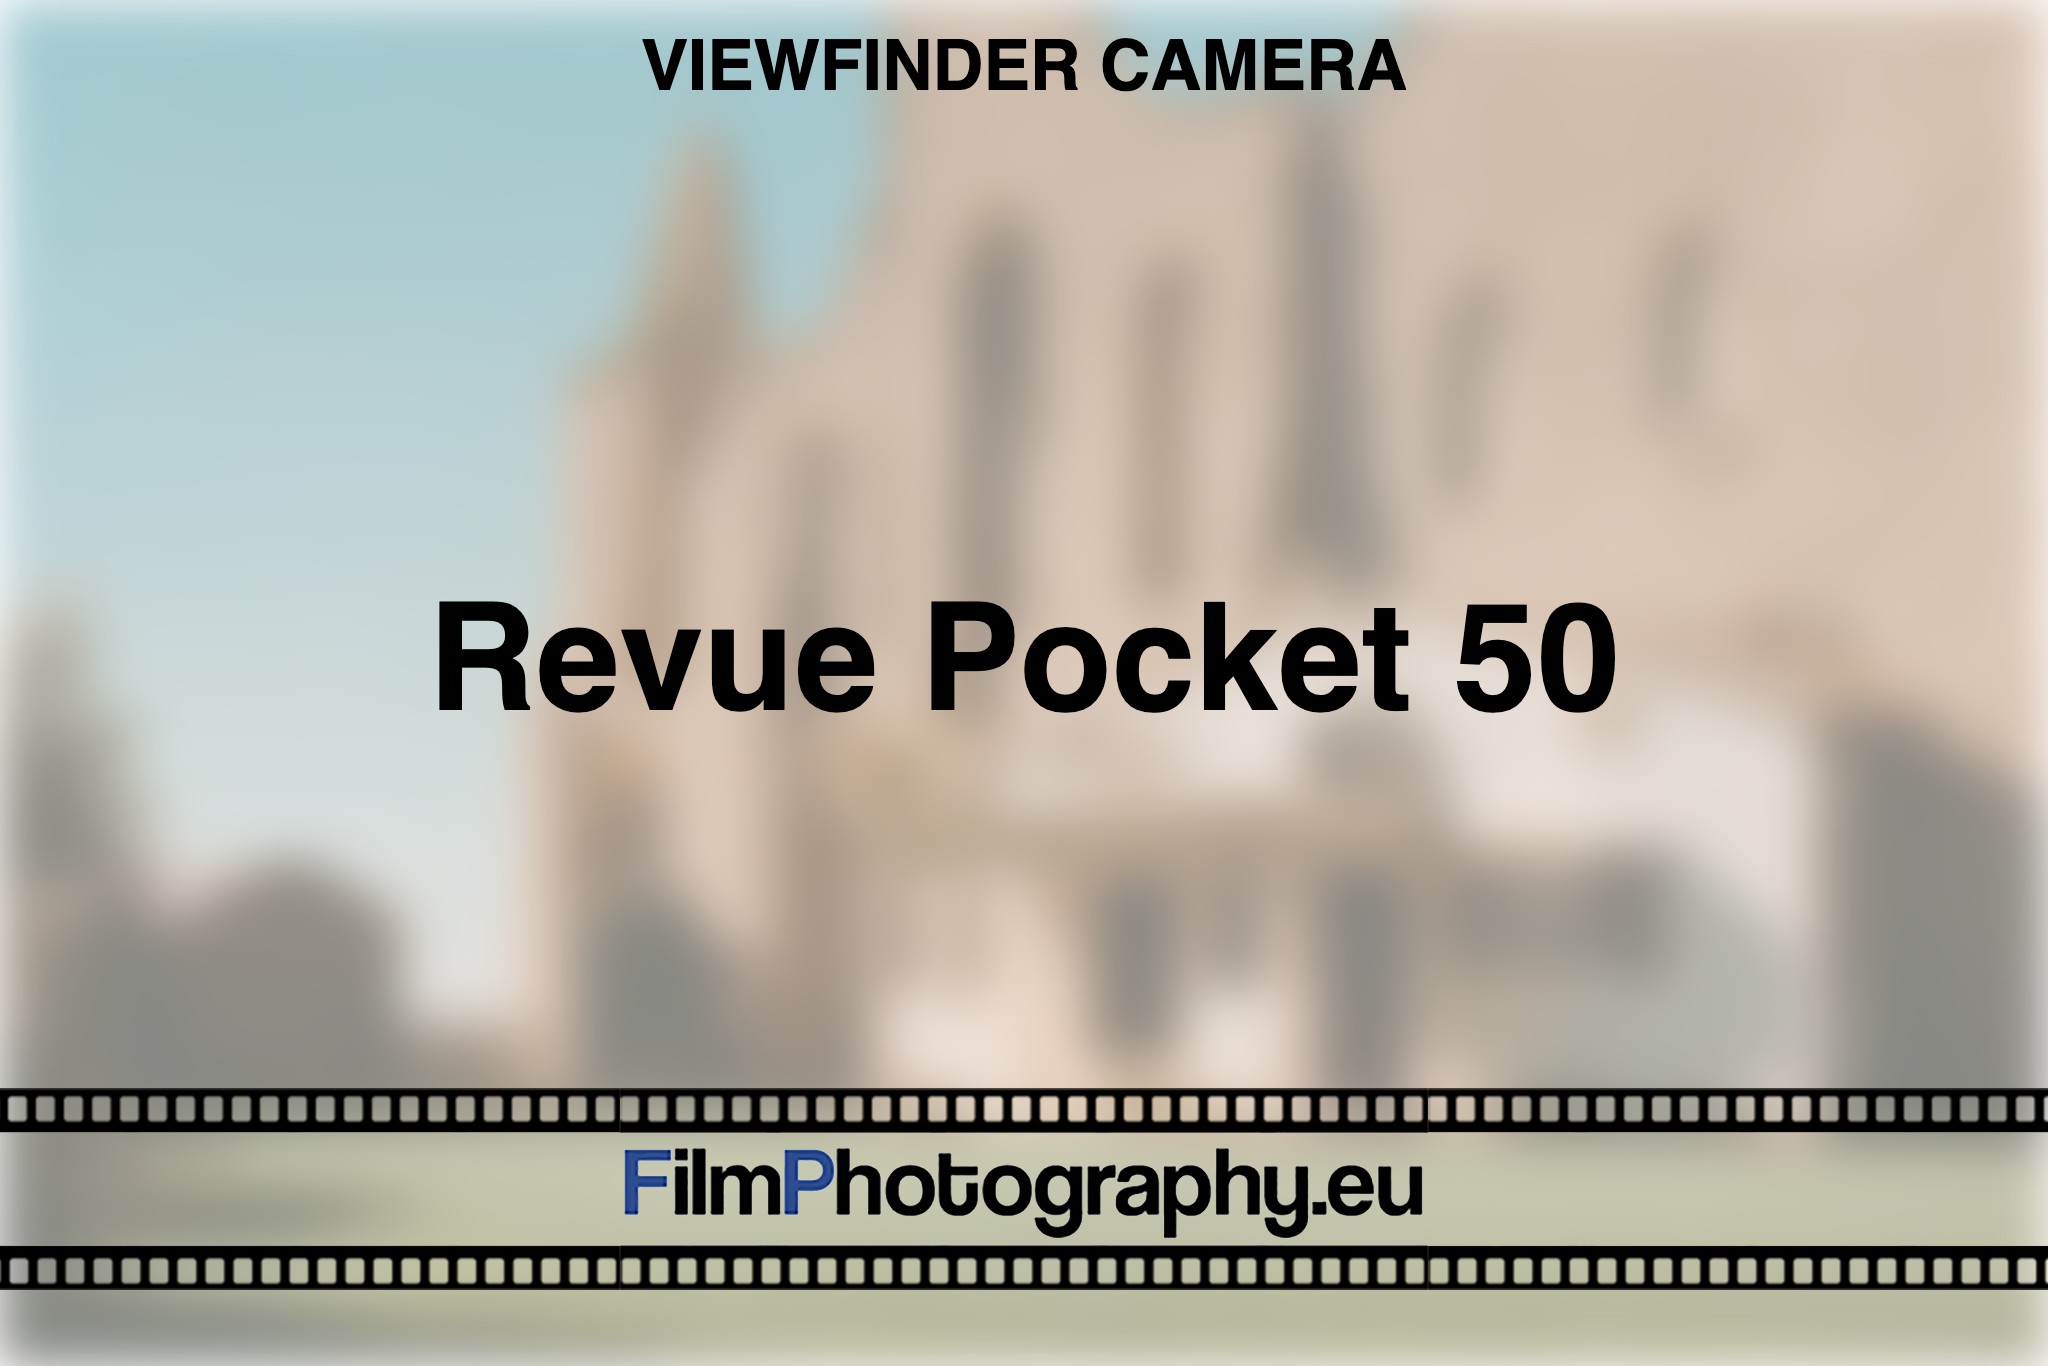 revue-pocket-50-viewfinder-camera-bnv